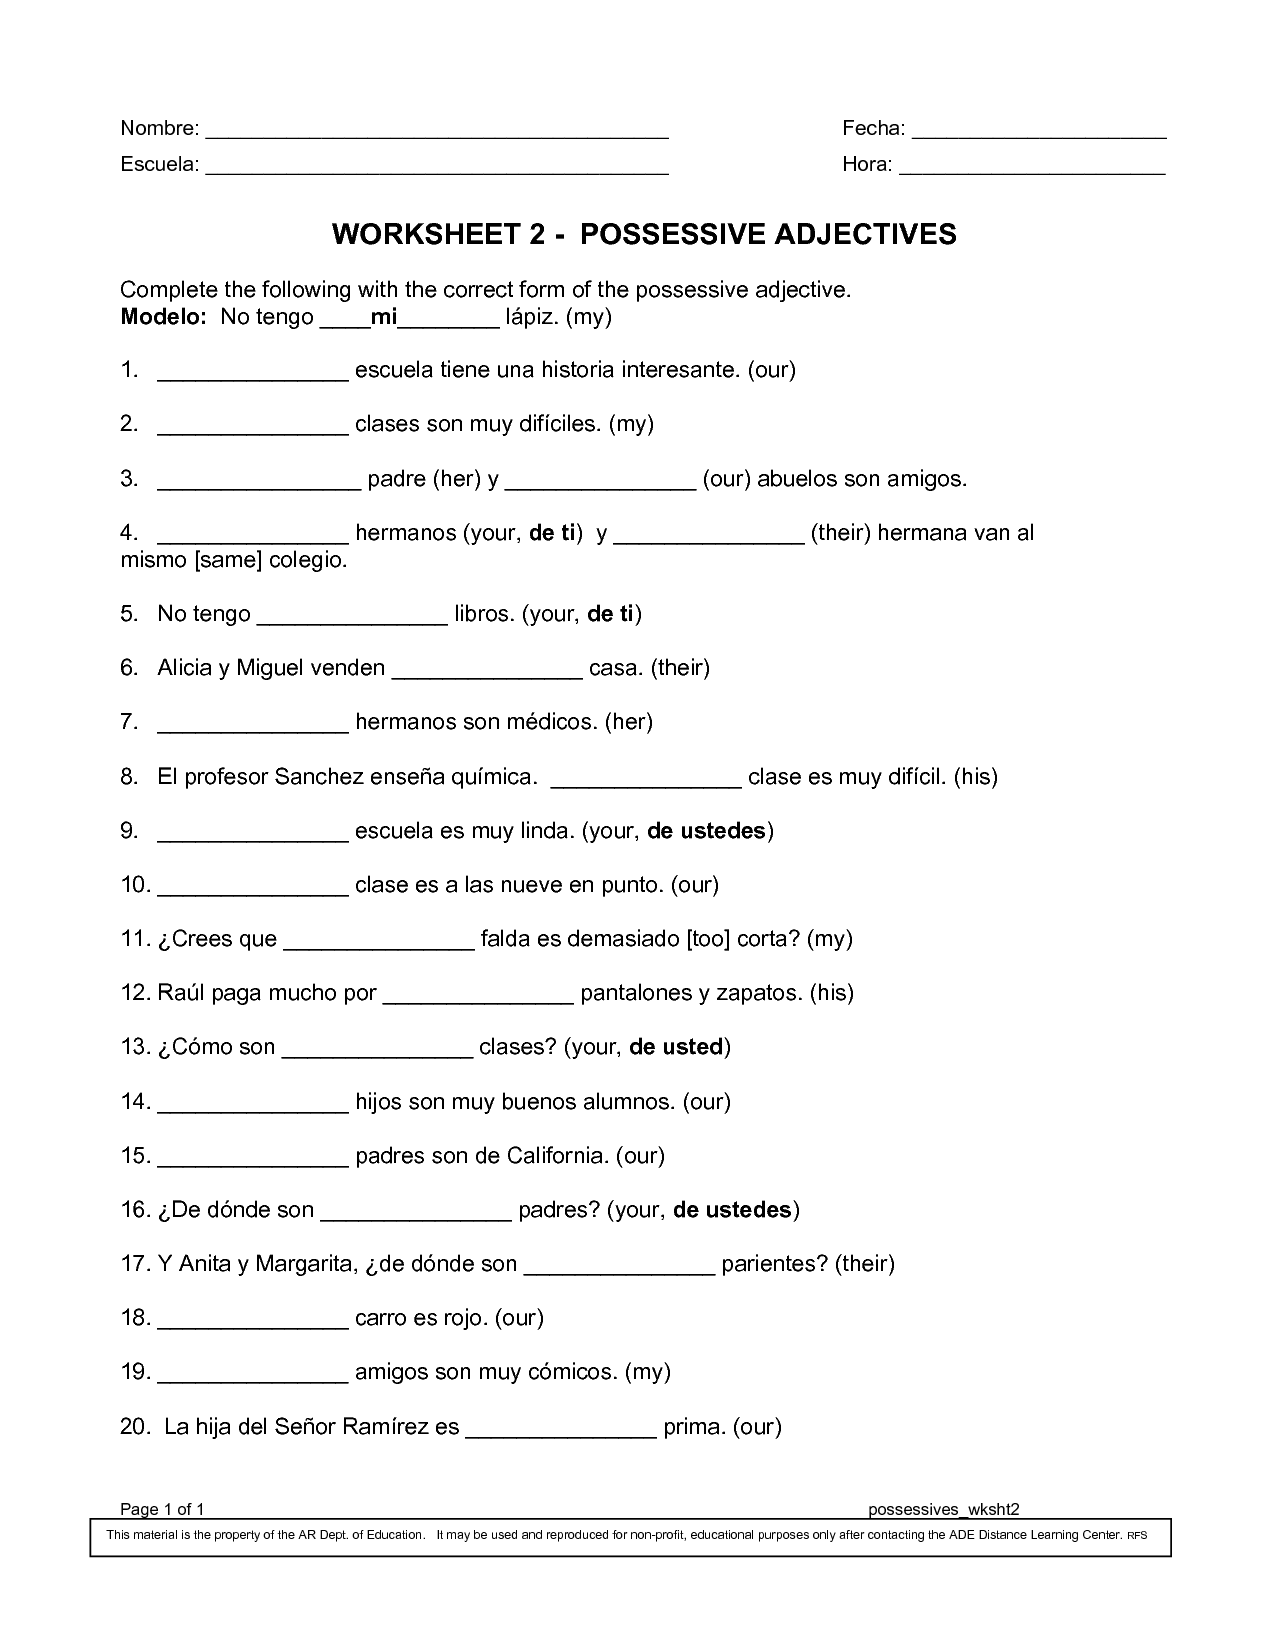 possessive-adjectives-and-pronouns-ficha-interactiva-y-descargable-puedes-hacer-los-ejercicios